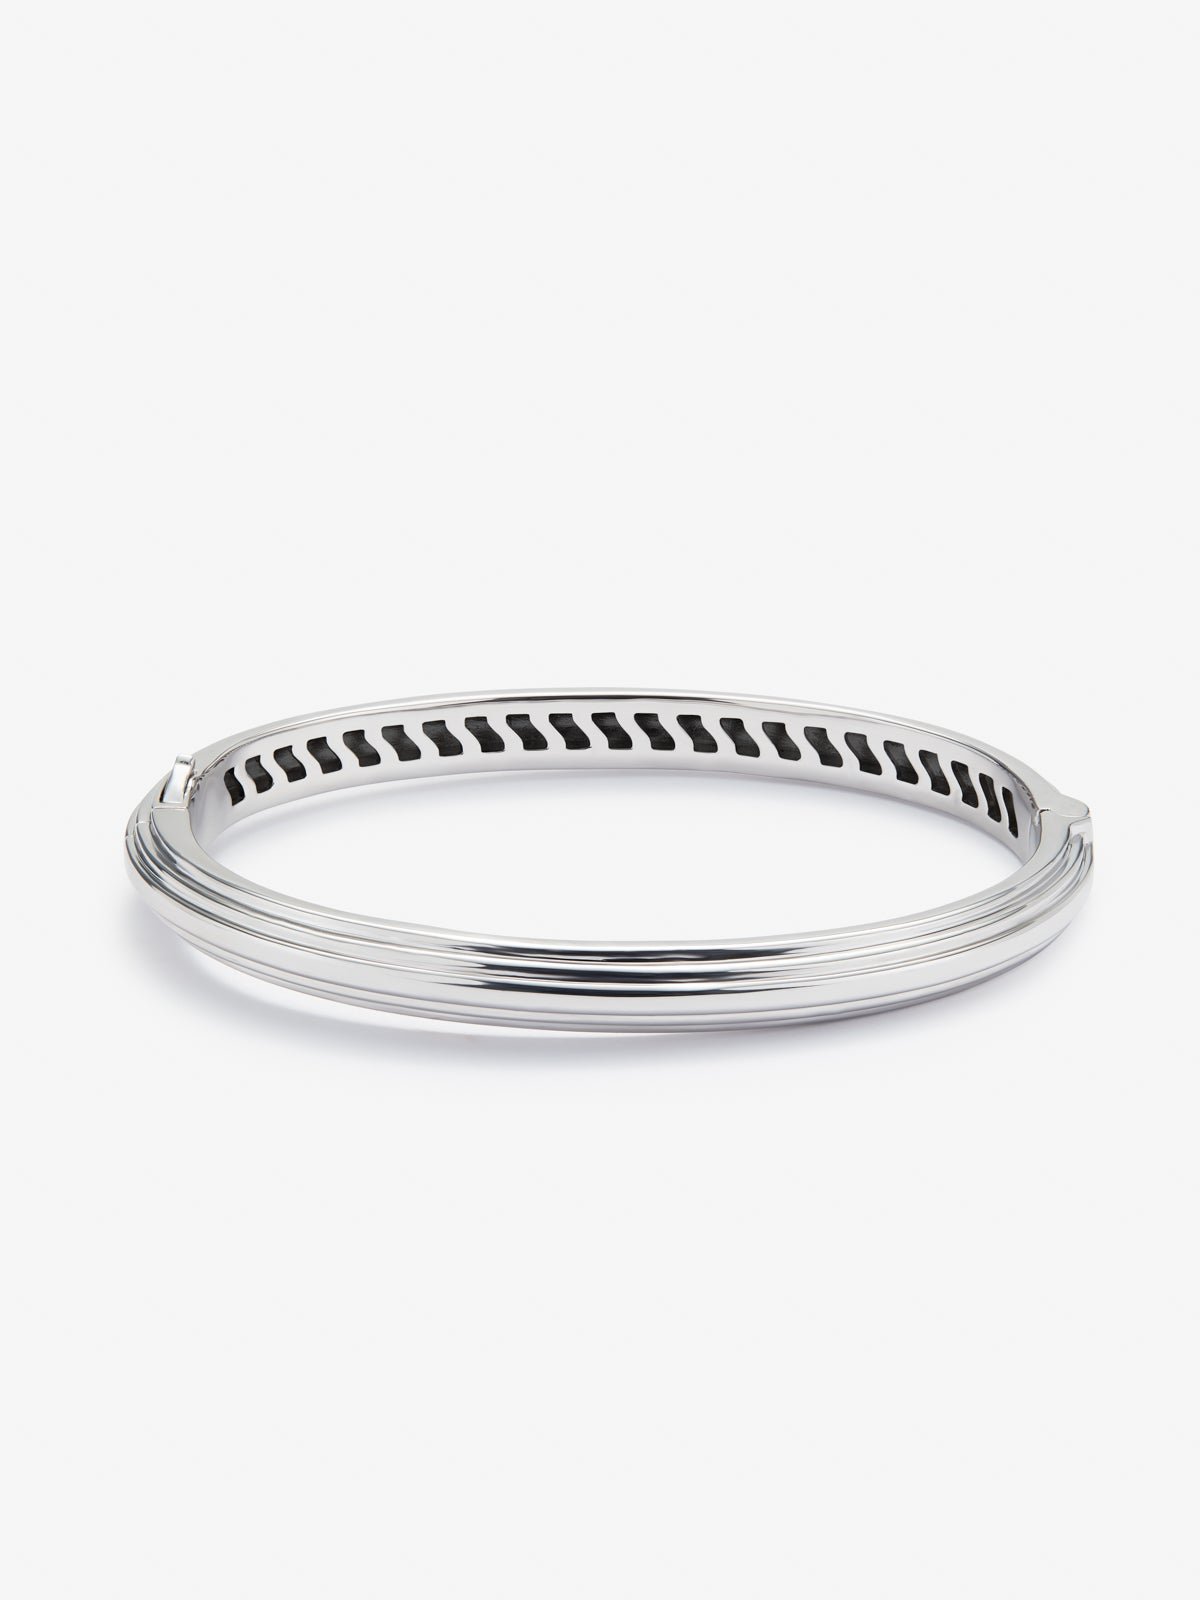 Rigid 926 silver bracelet